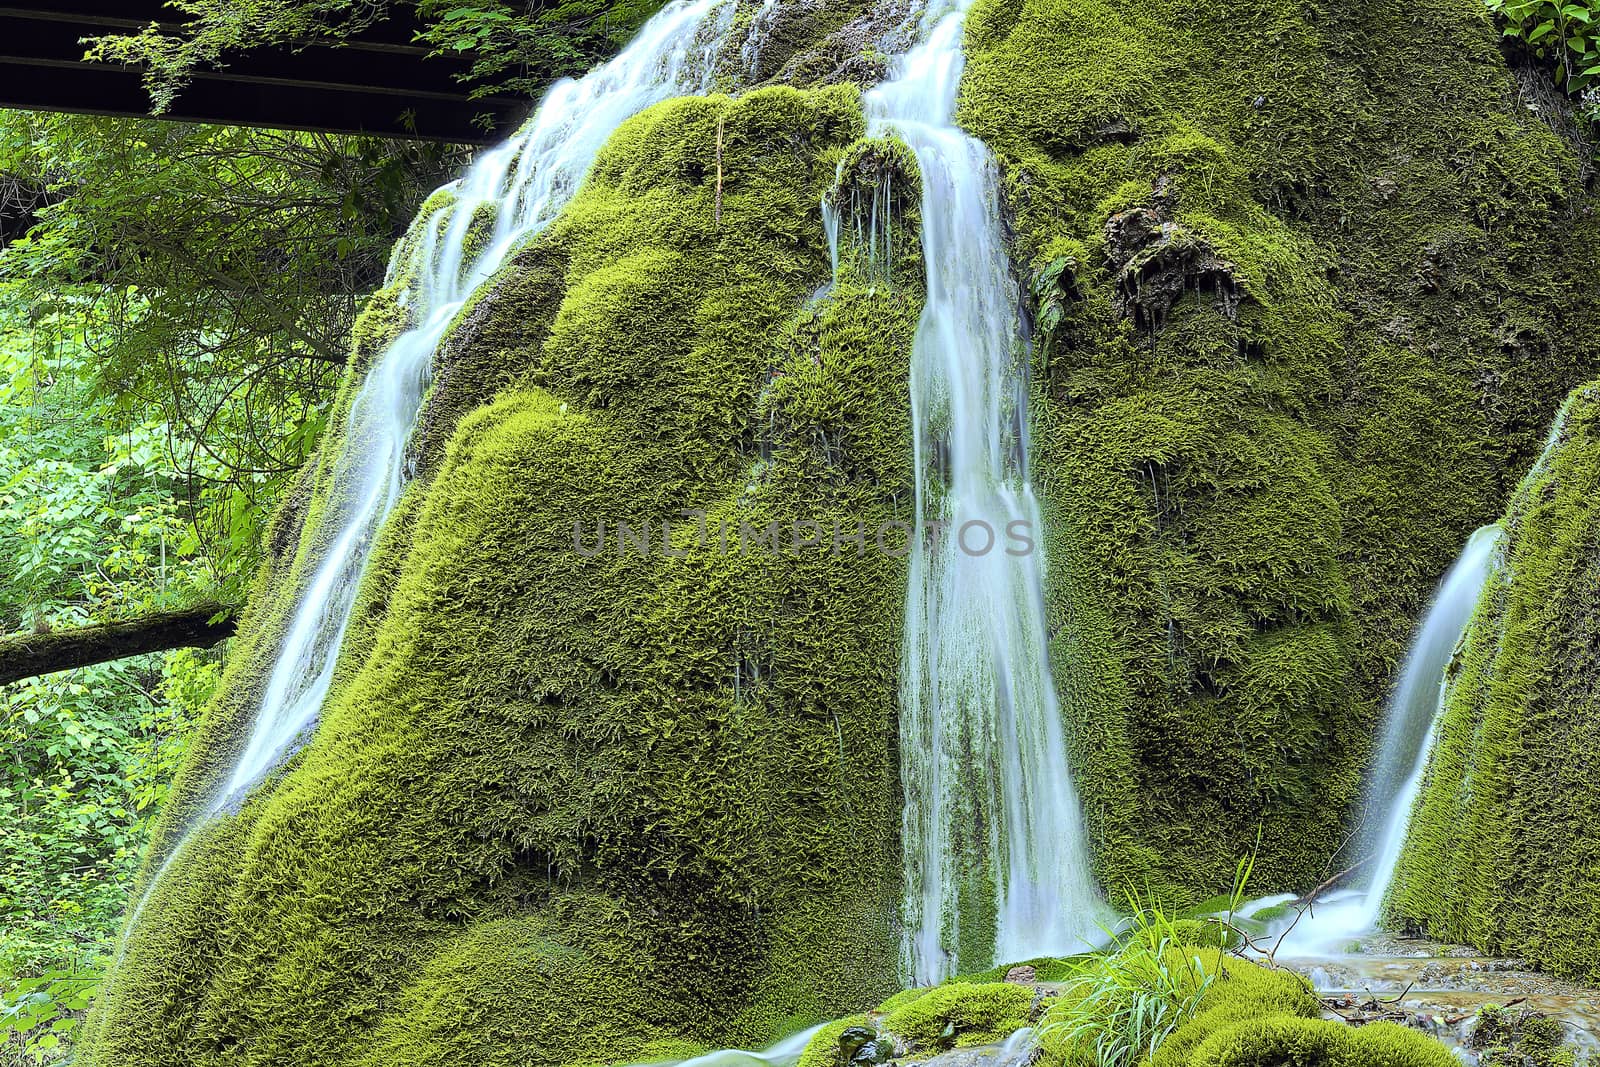 beautiful cascade on mossy rock, Bigar waterfall detail